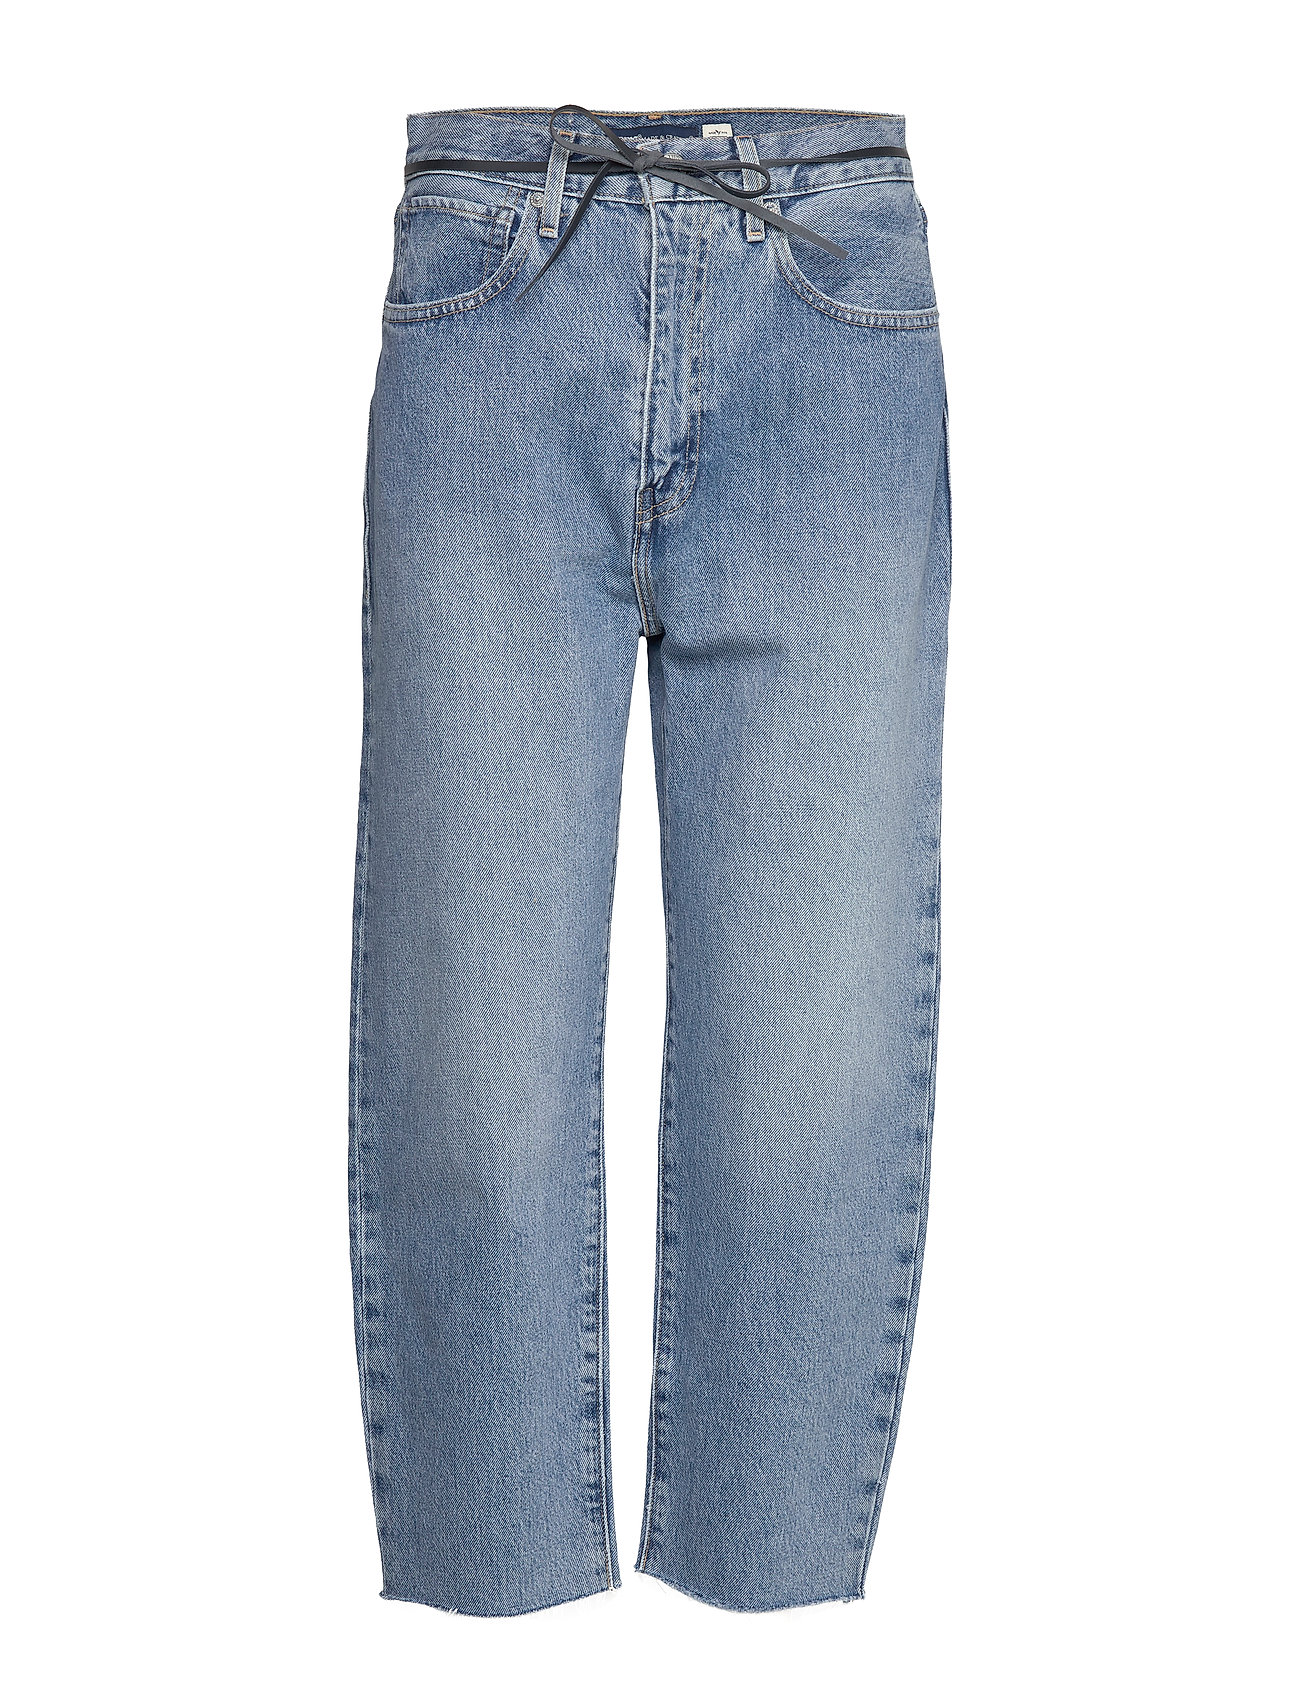 Levi's Made & Crafted Lmc Barrel Lmc Palm Blues - Straight jeans 